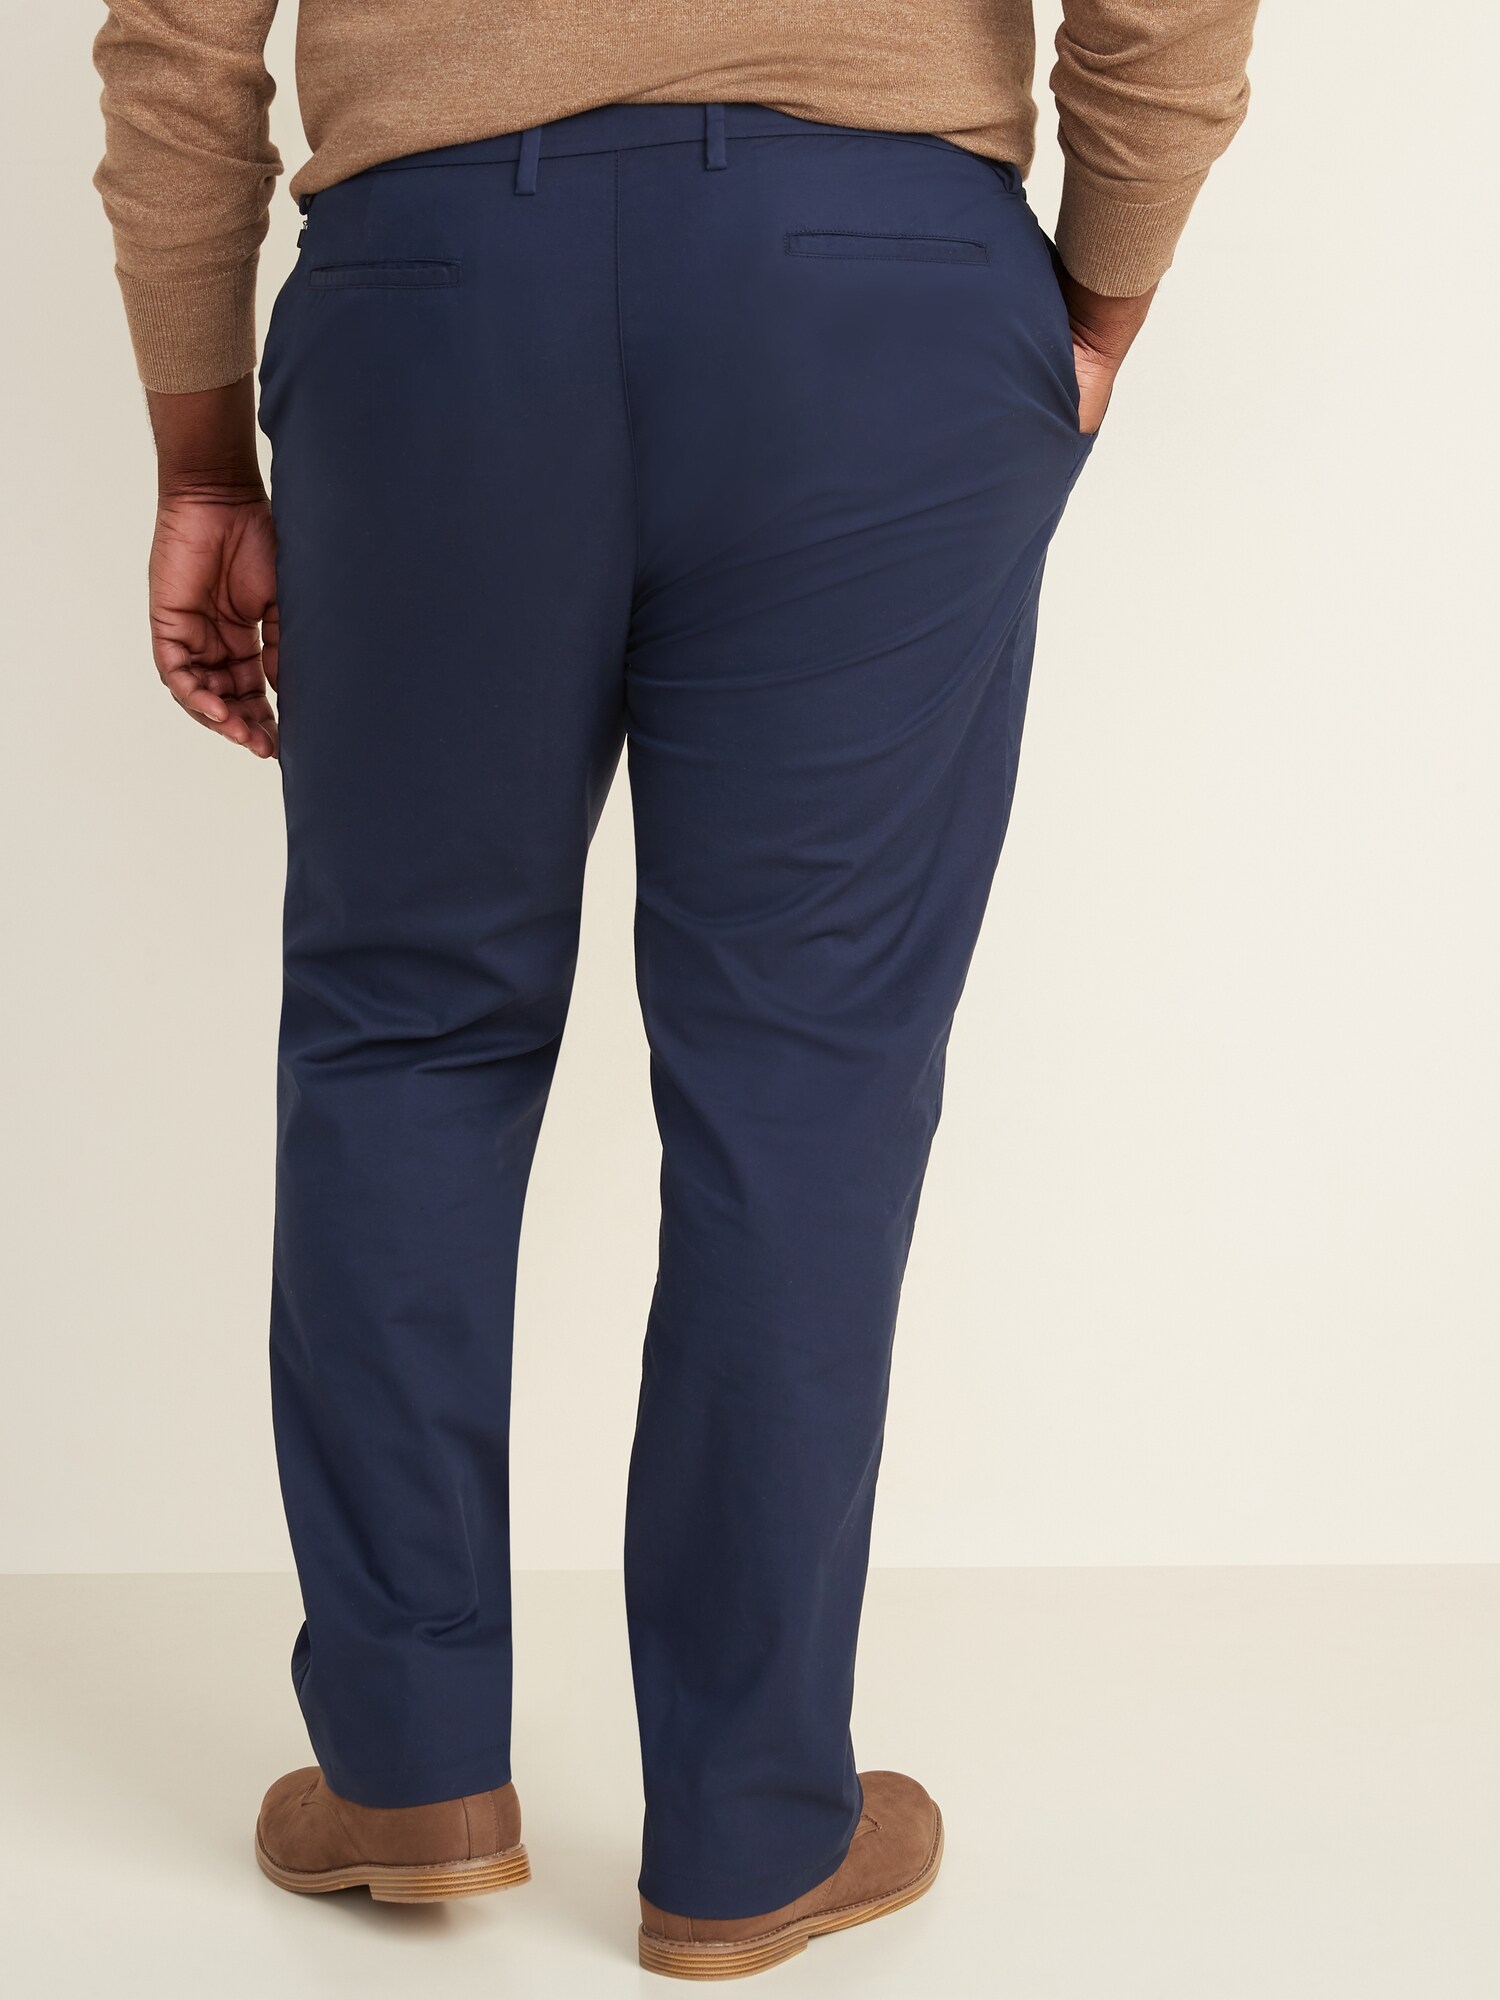 Slim Built-In Flex Ultimate Tech Pants for Men | Old Navy